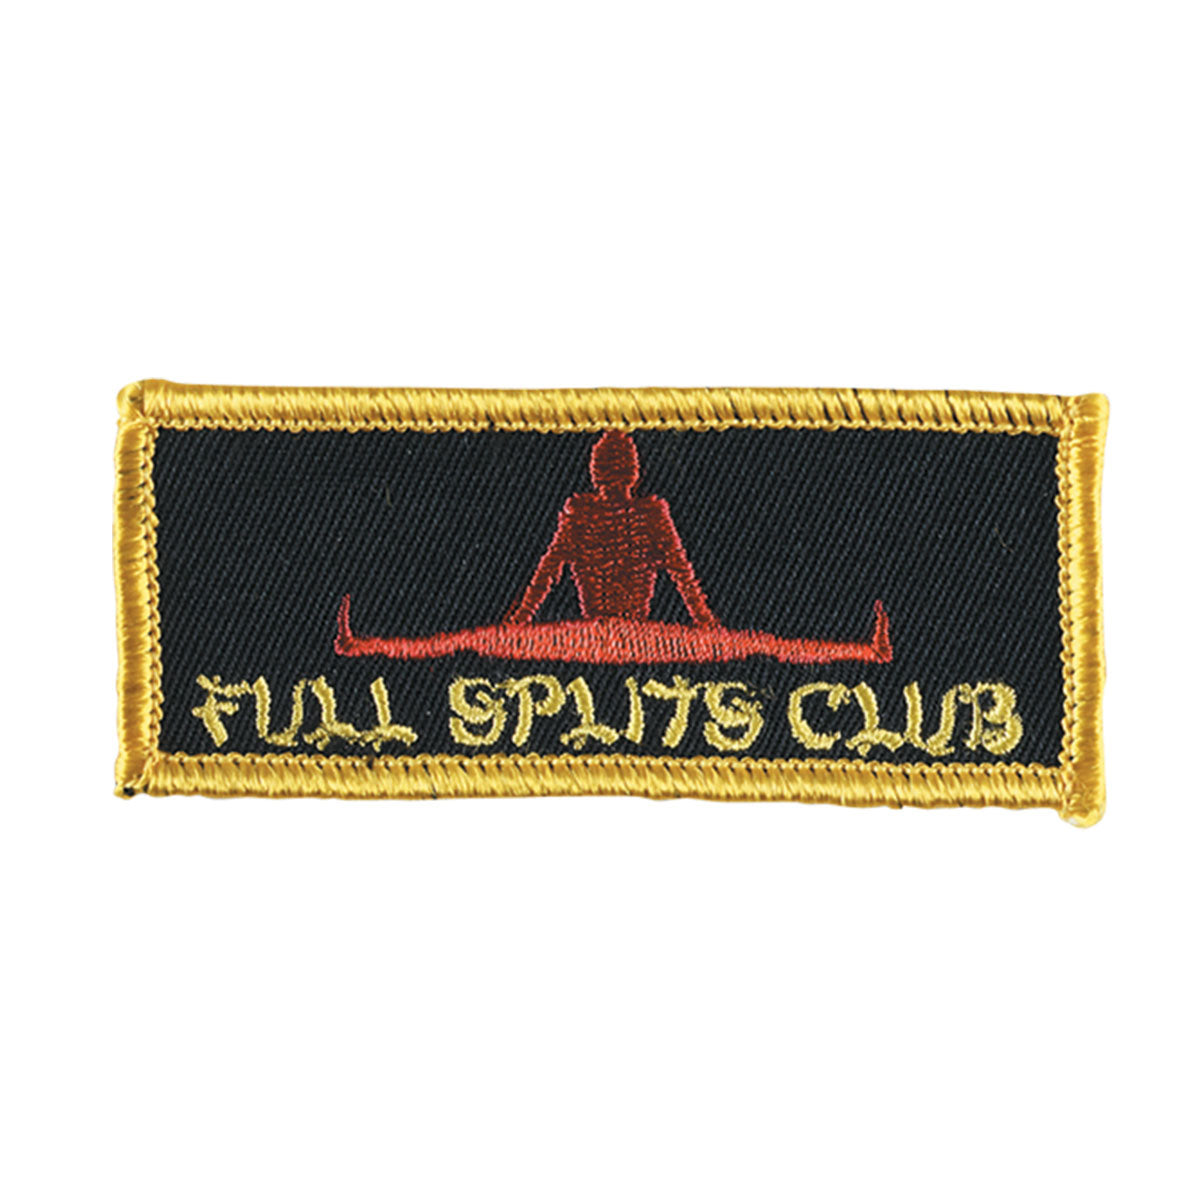 Full Splits Club Shoulder Patch